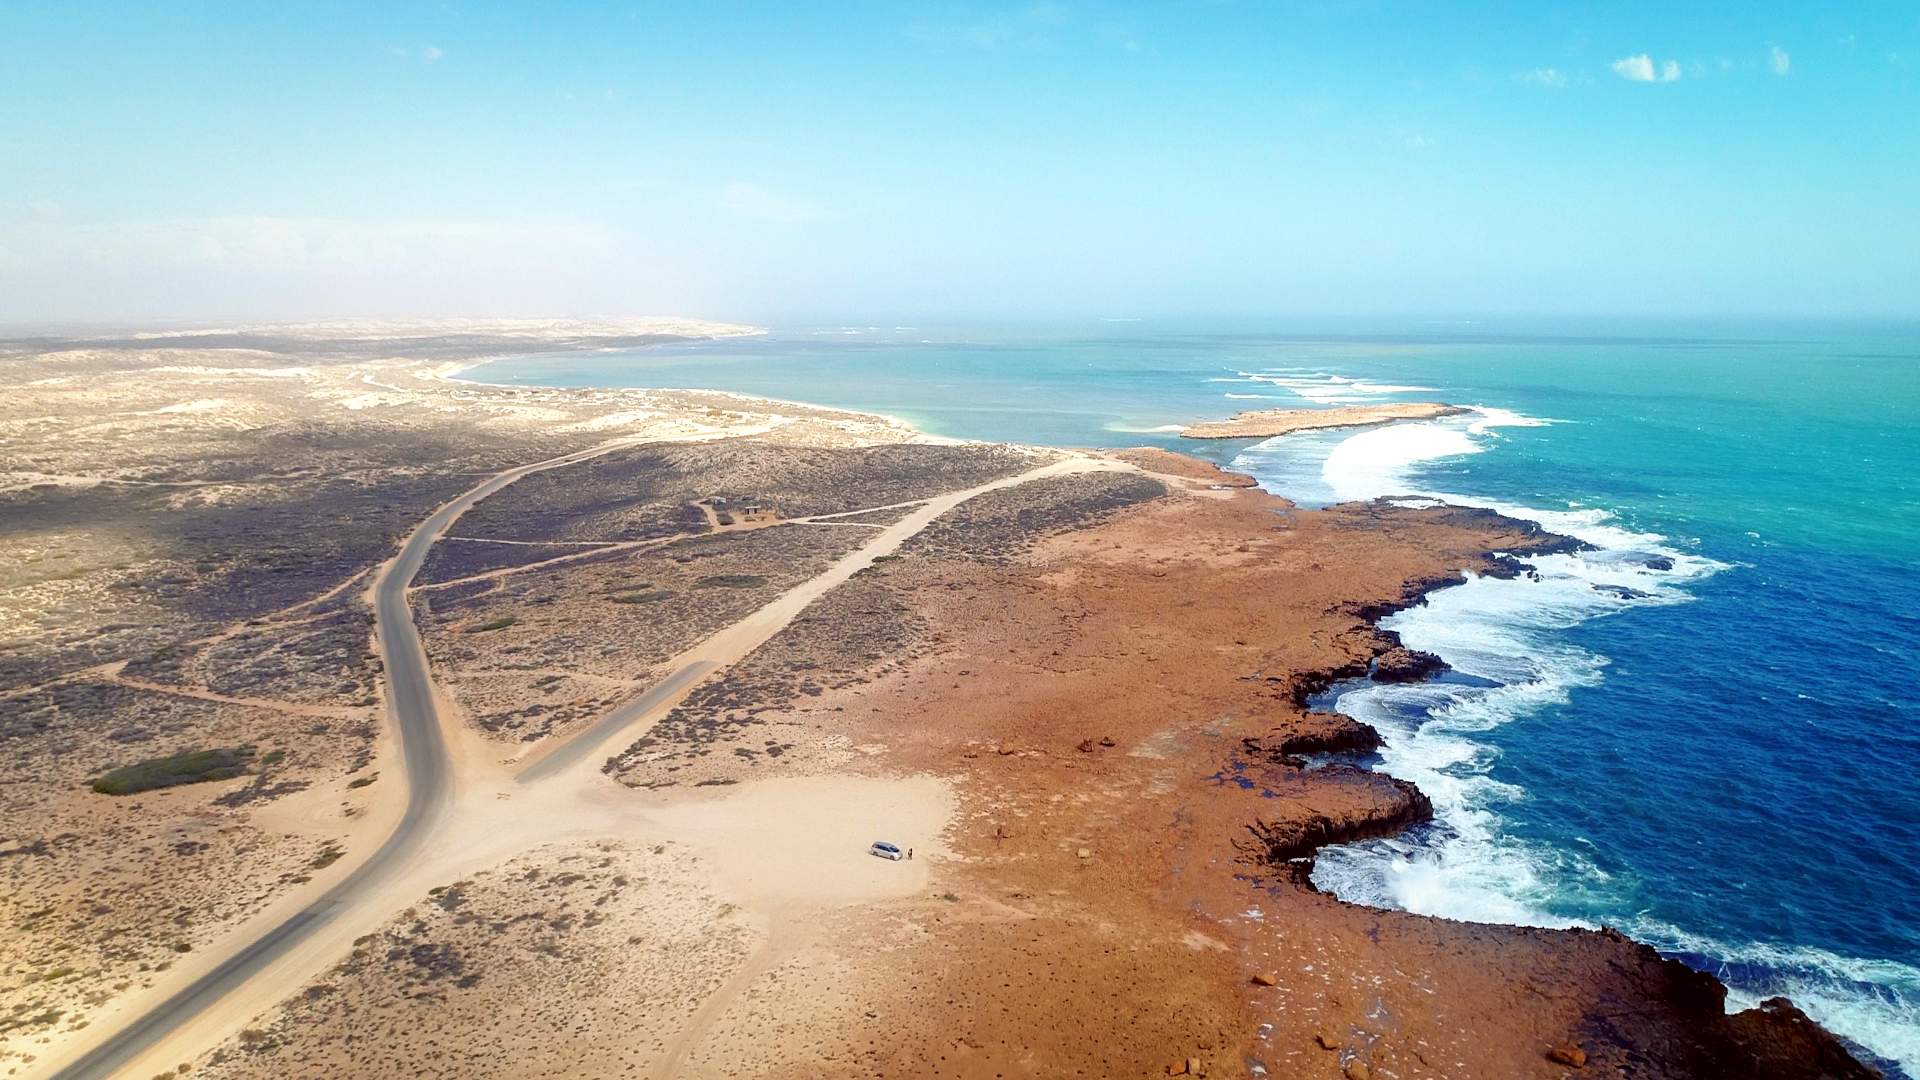 Aerial shot of a remote area of Australia